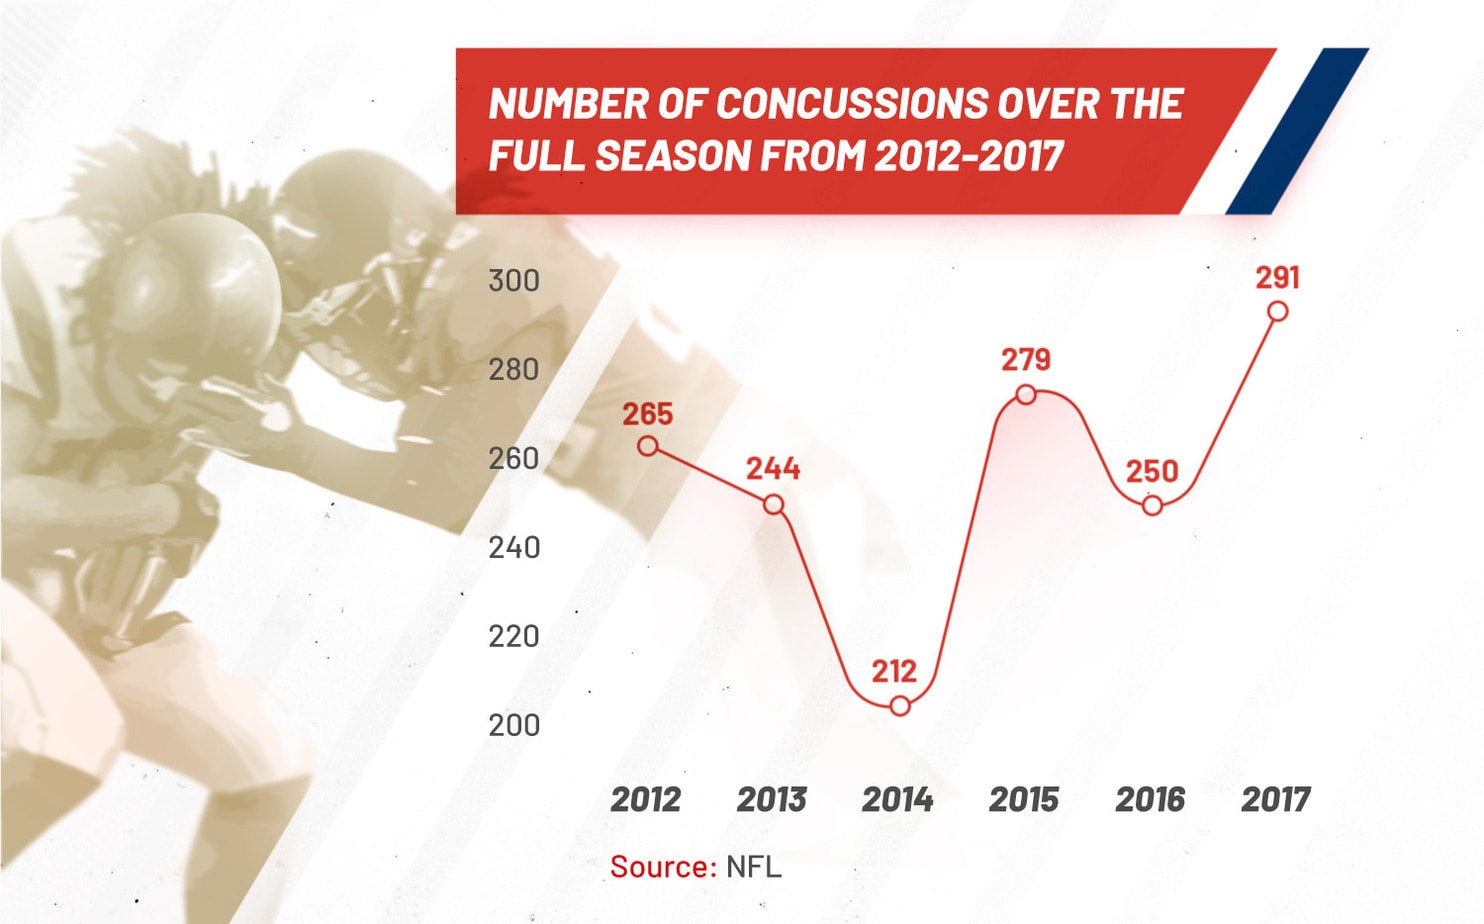 NFL concussions